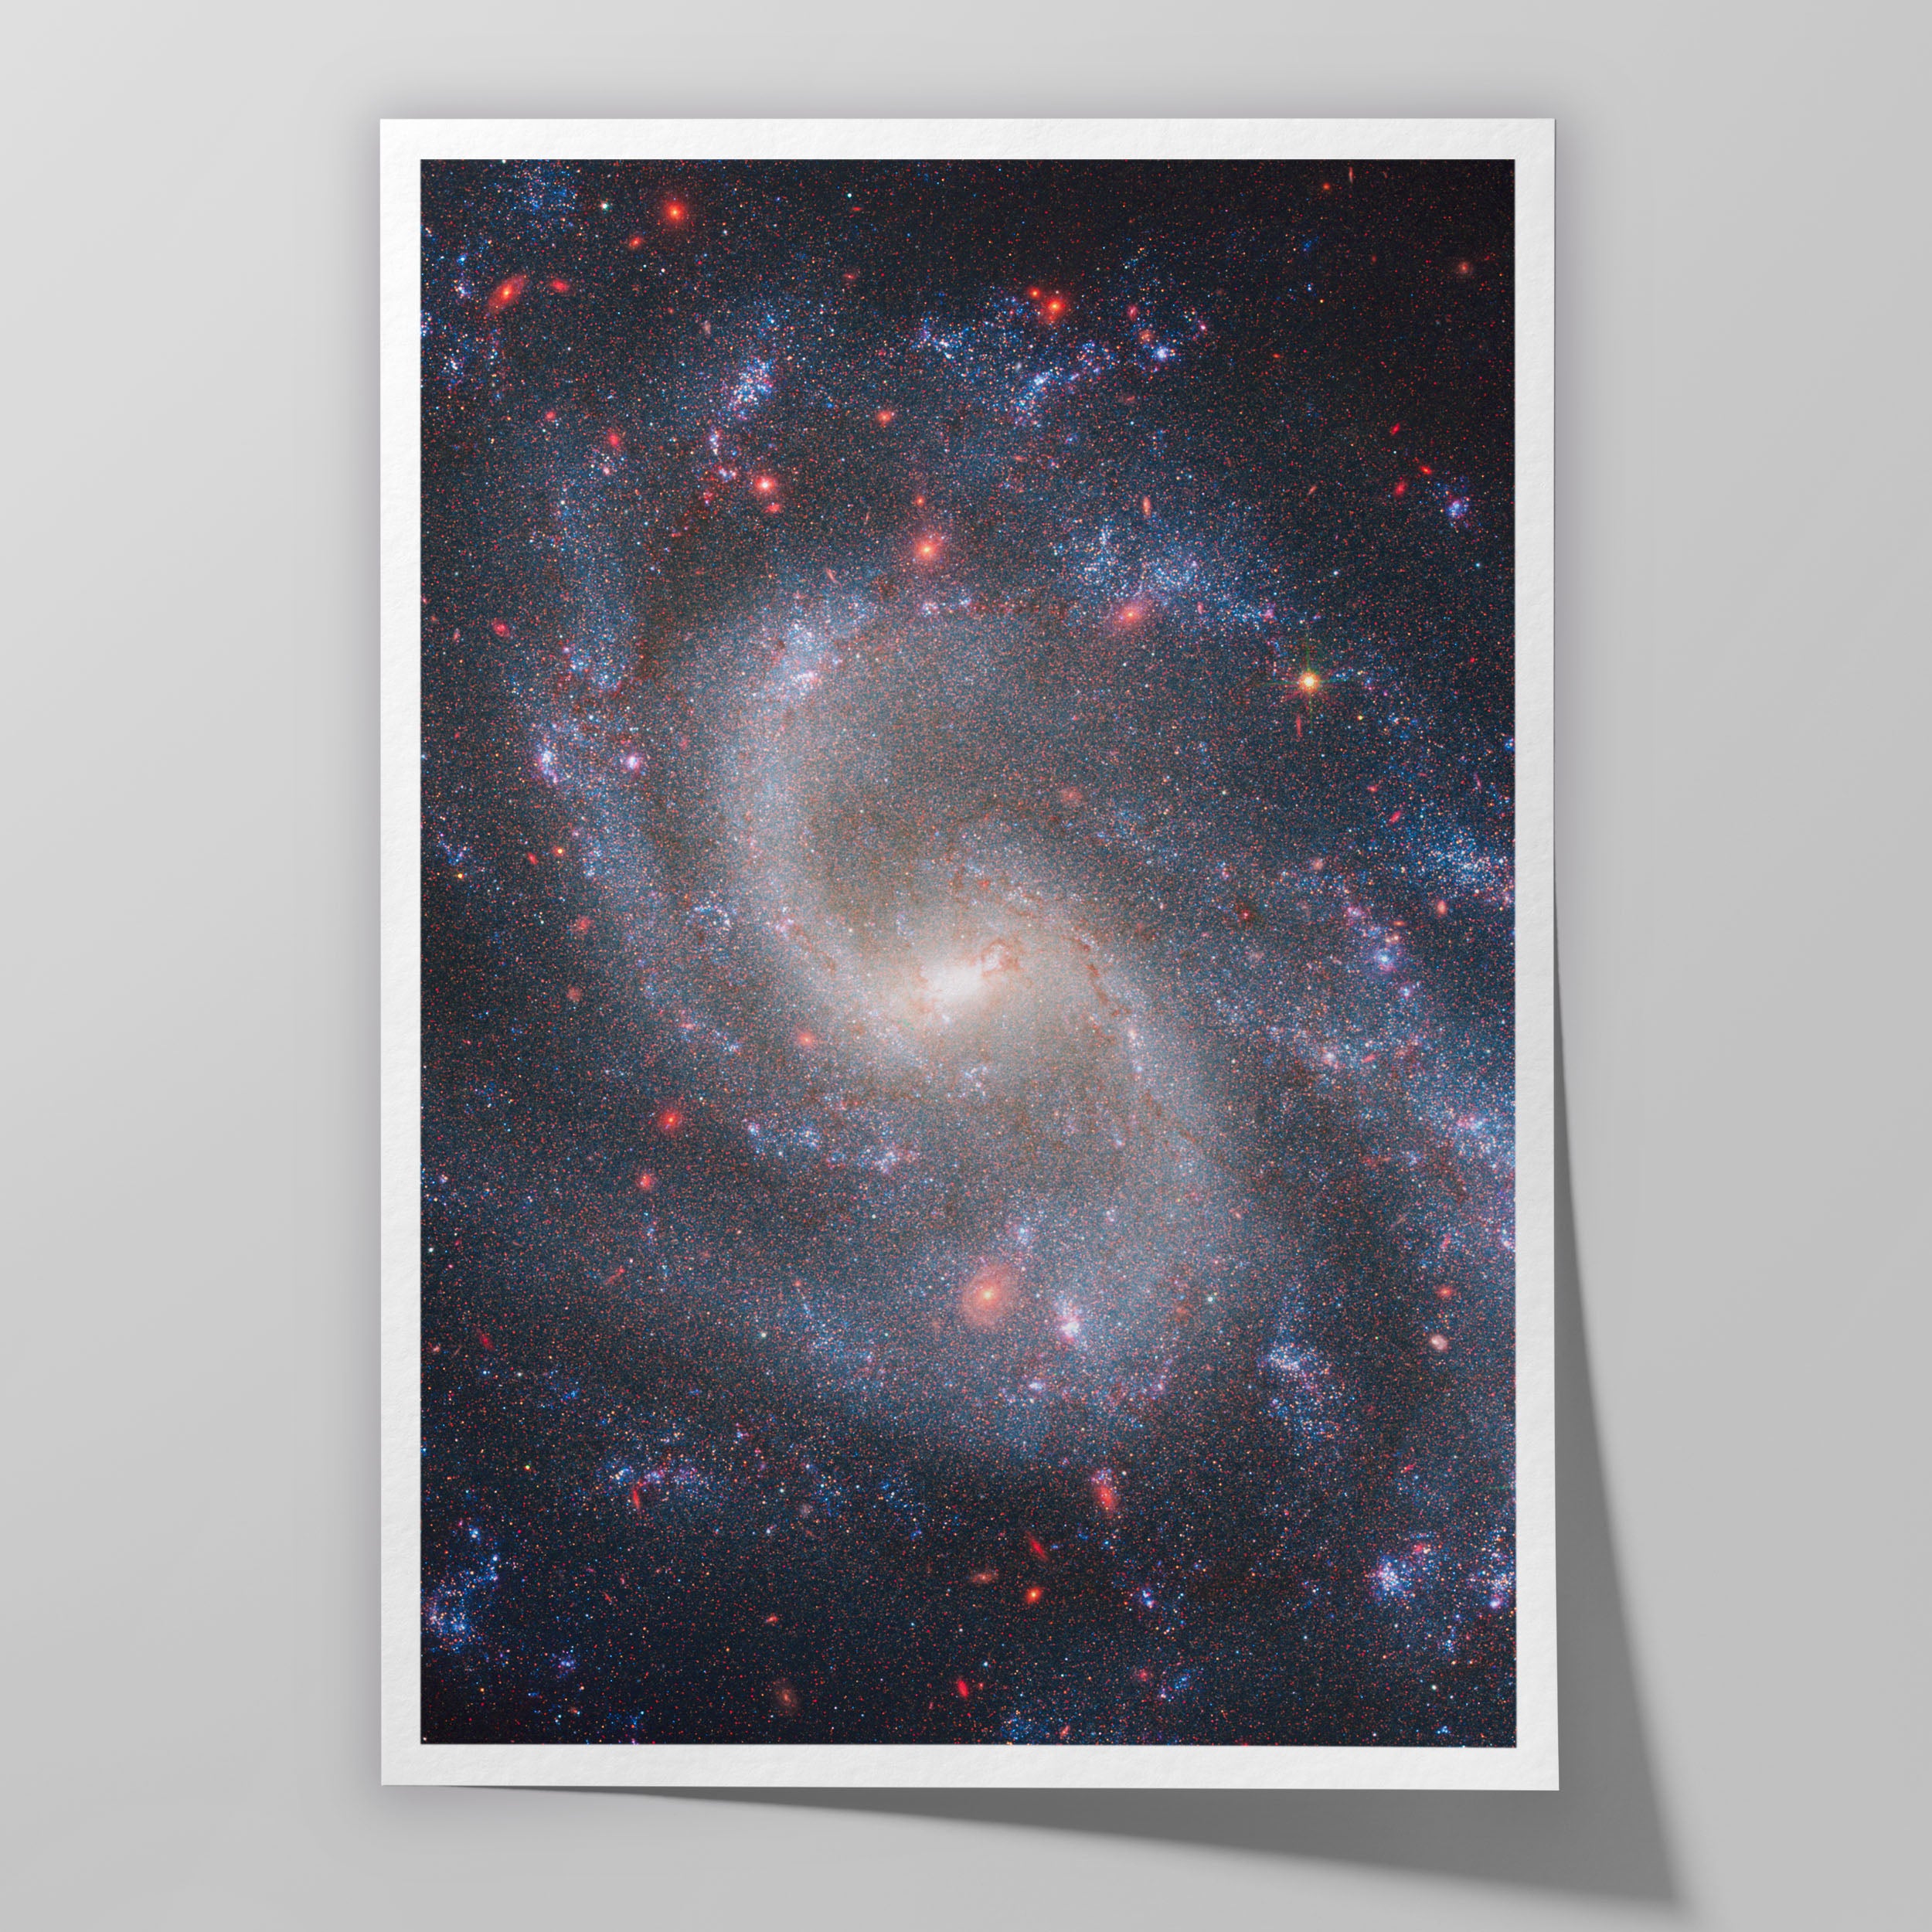 Galaxy NGC 5584